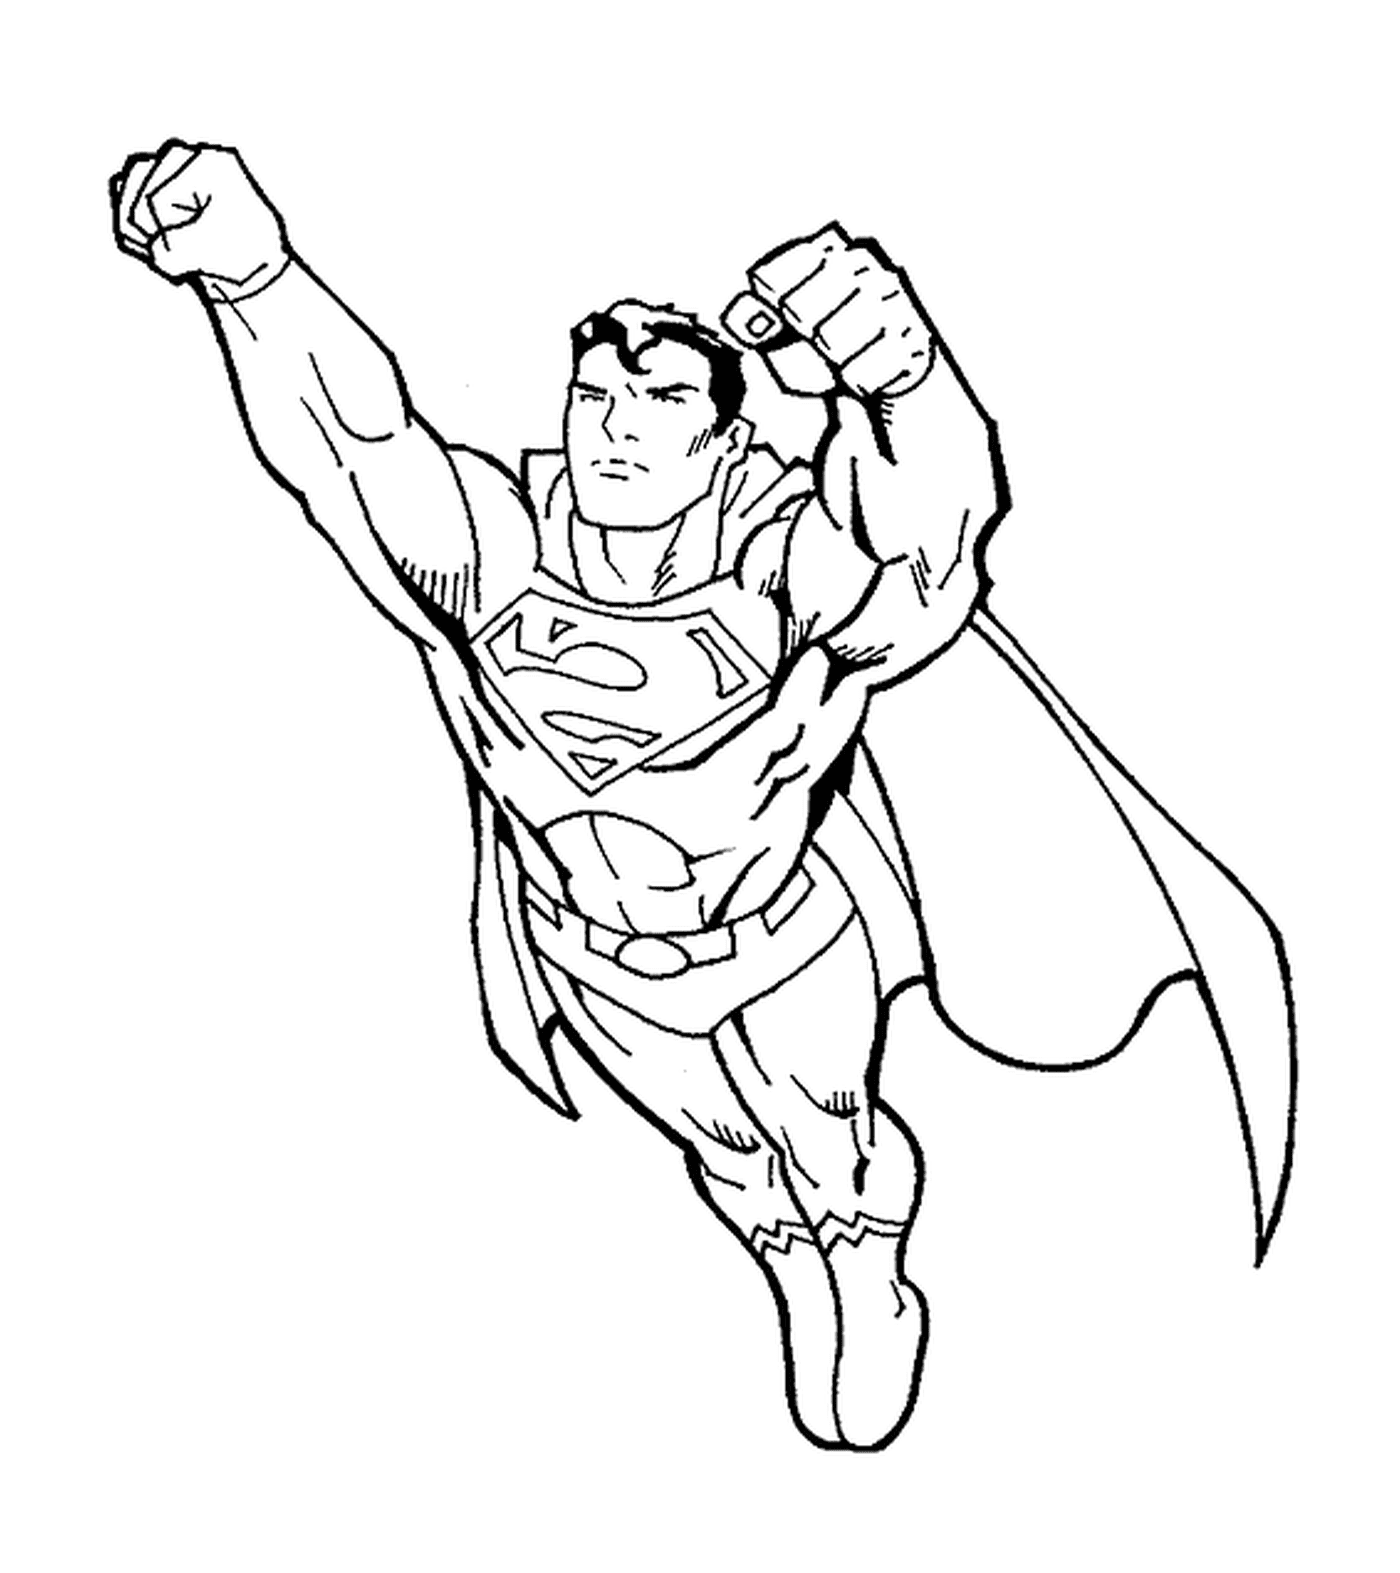   Superman, poings en avant 